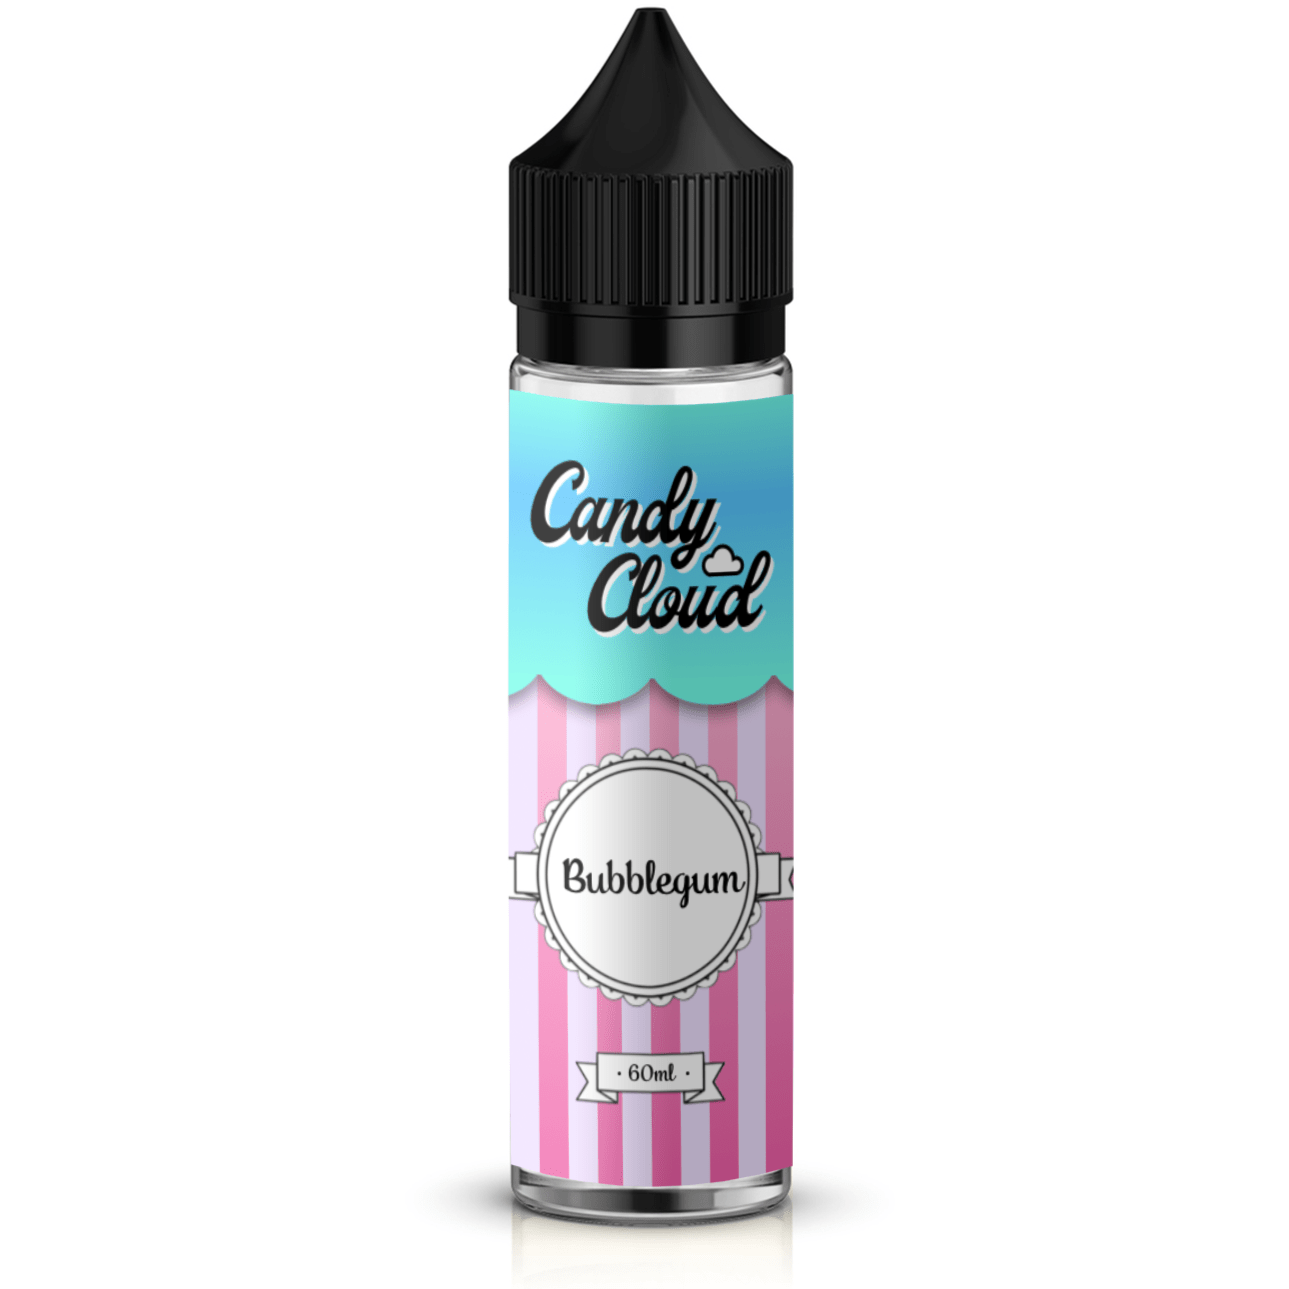 Candy Cloud - Bubblegum 60ml Longfill E-Liquid - The British Vape Company